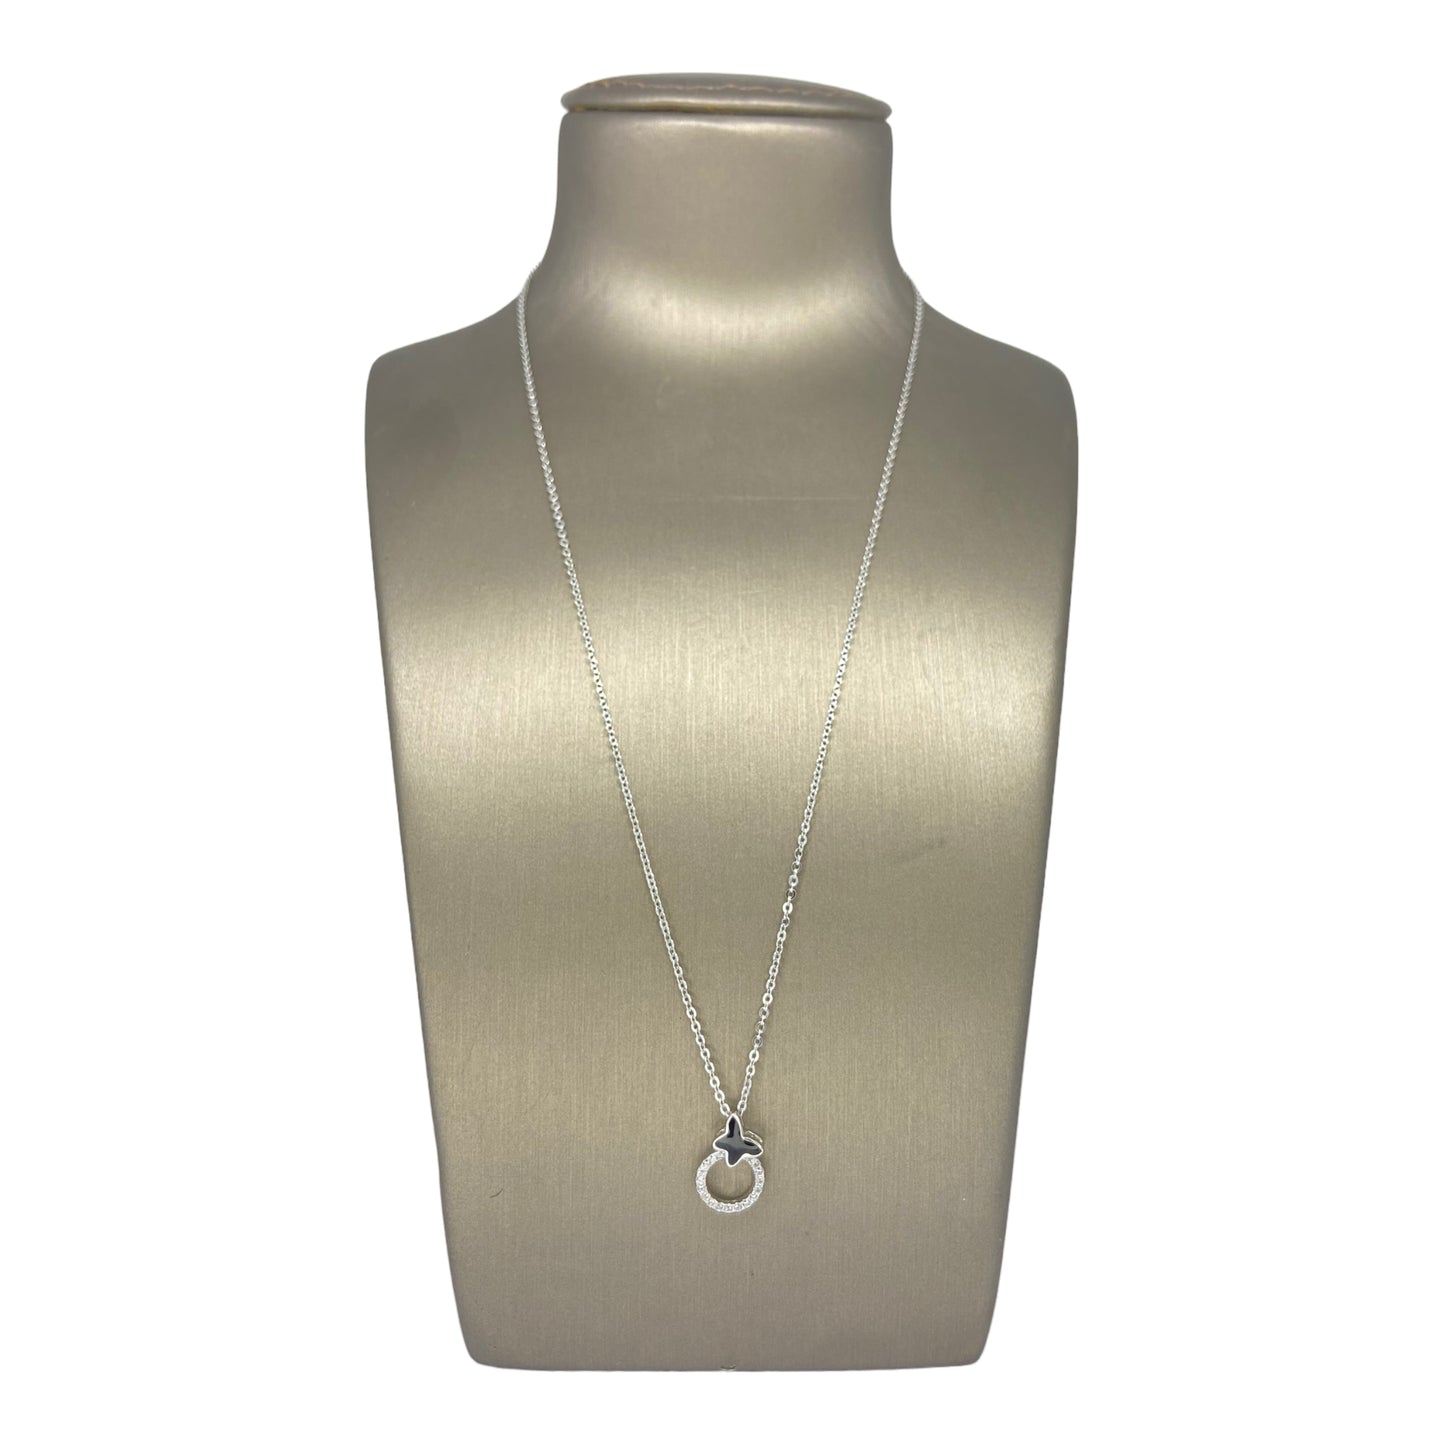 925 Silver Necklace - سلسال فضة عيار ٩٢٥